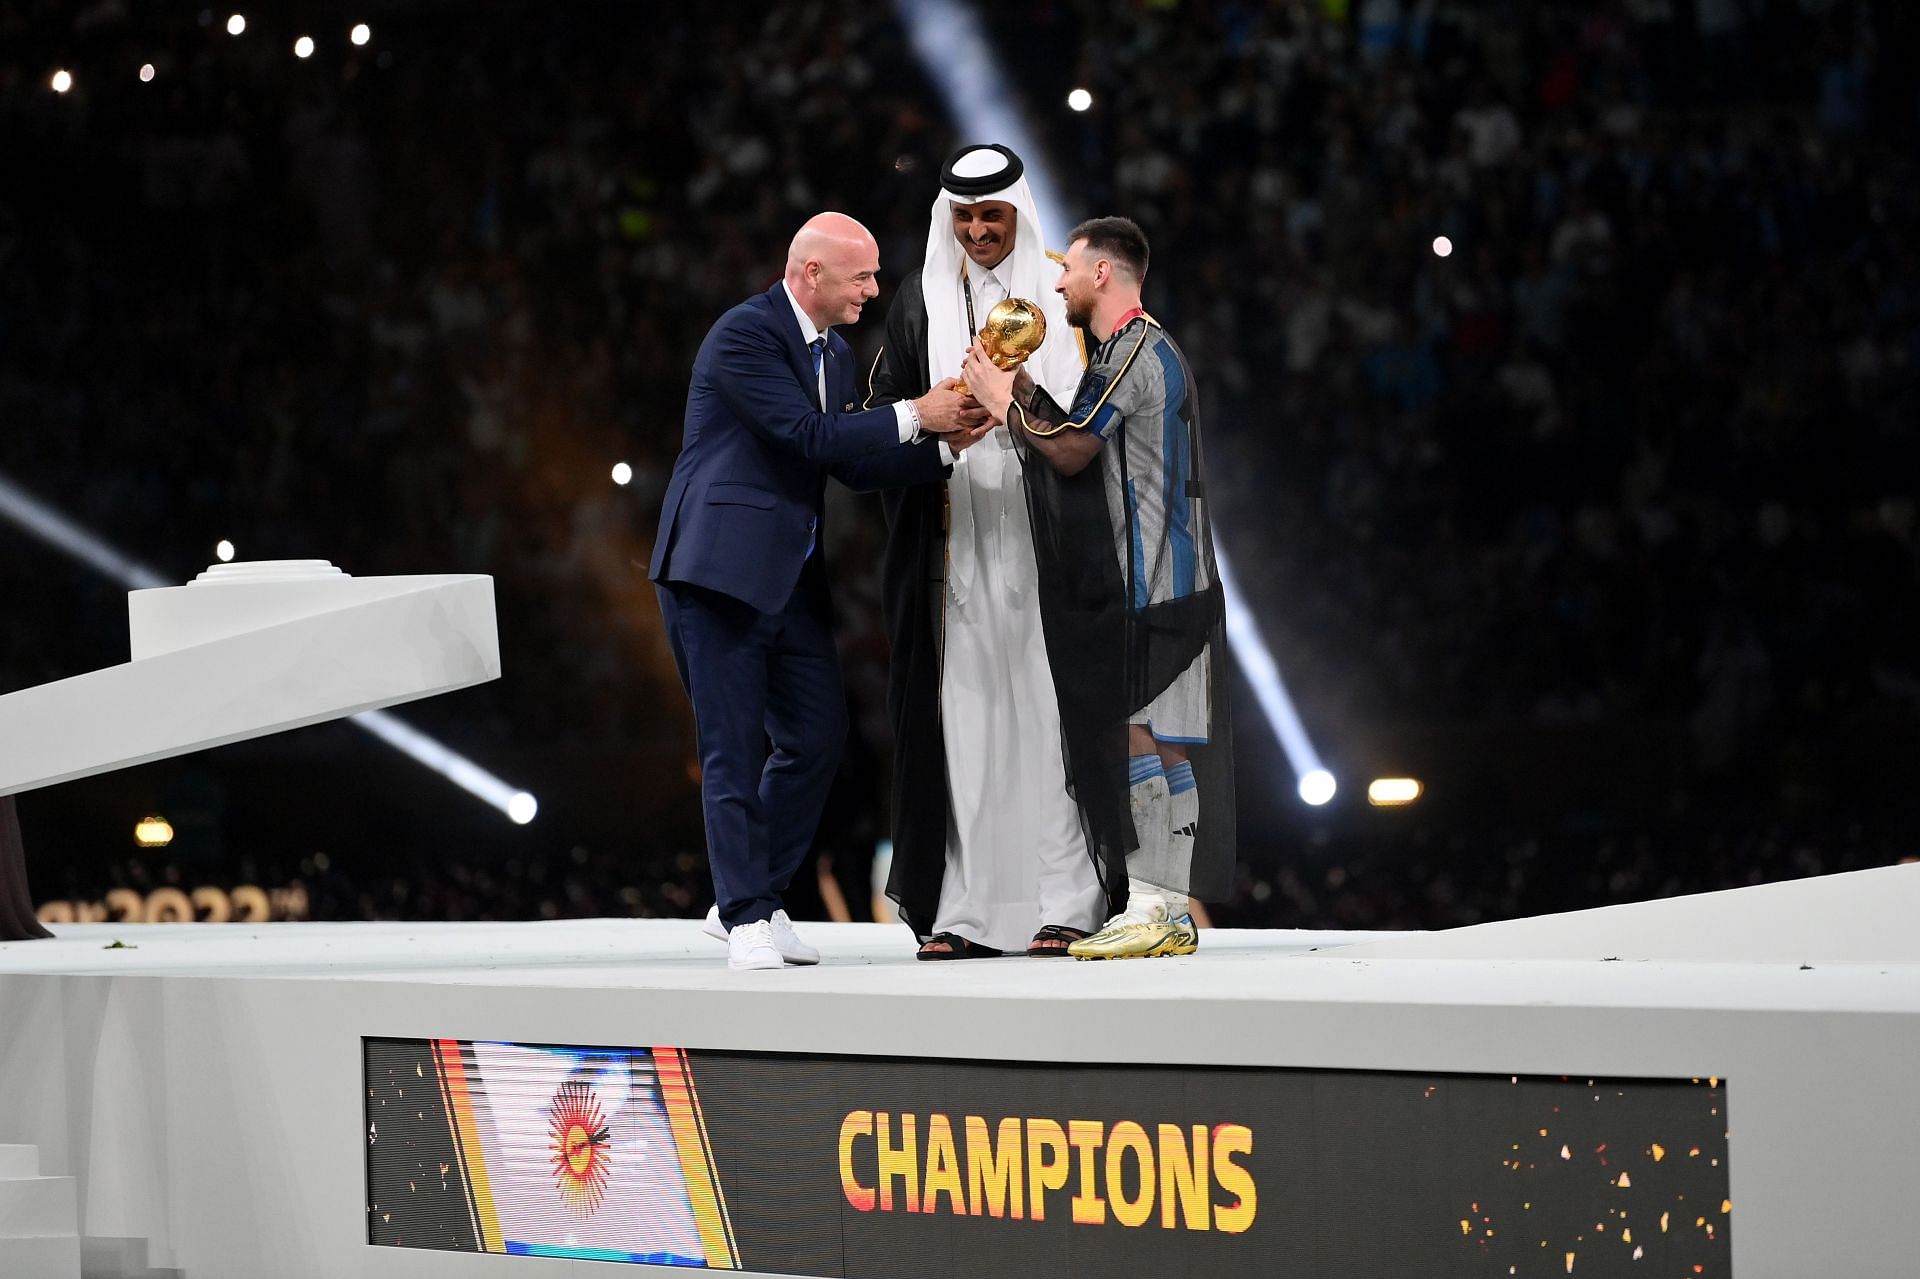 World Cup Final Awards Ceremony 2022 through Photos